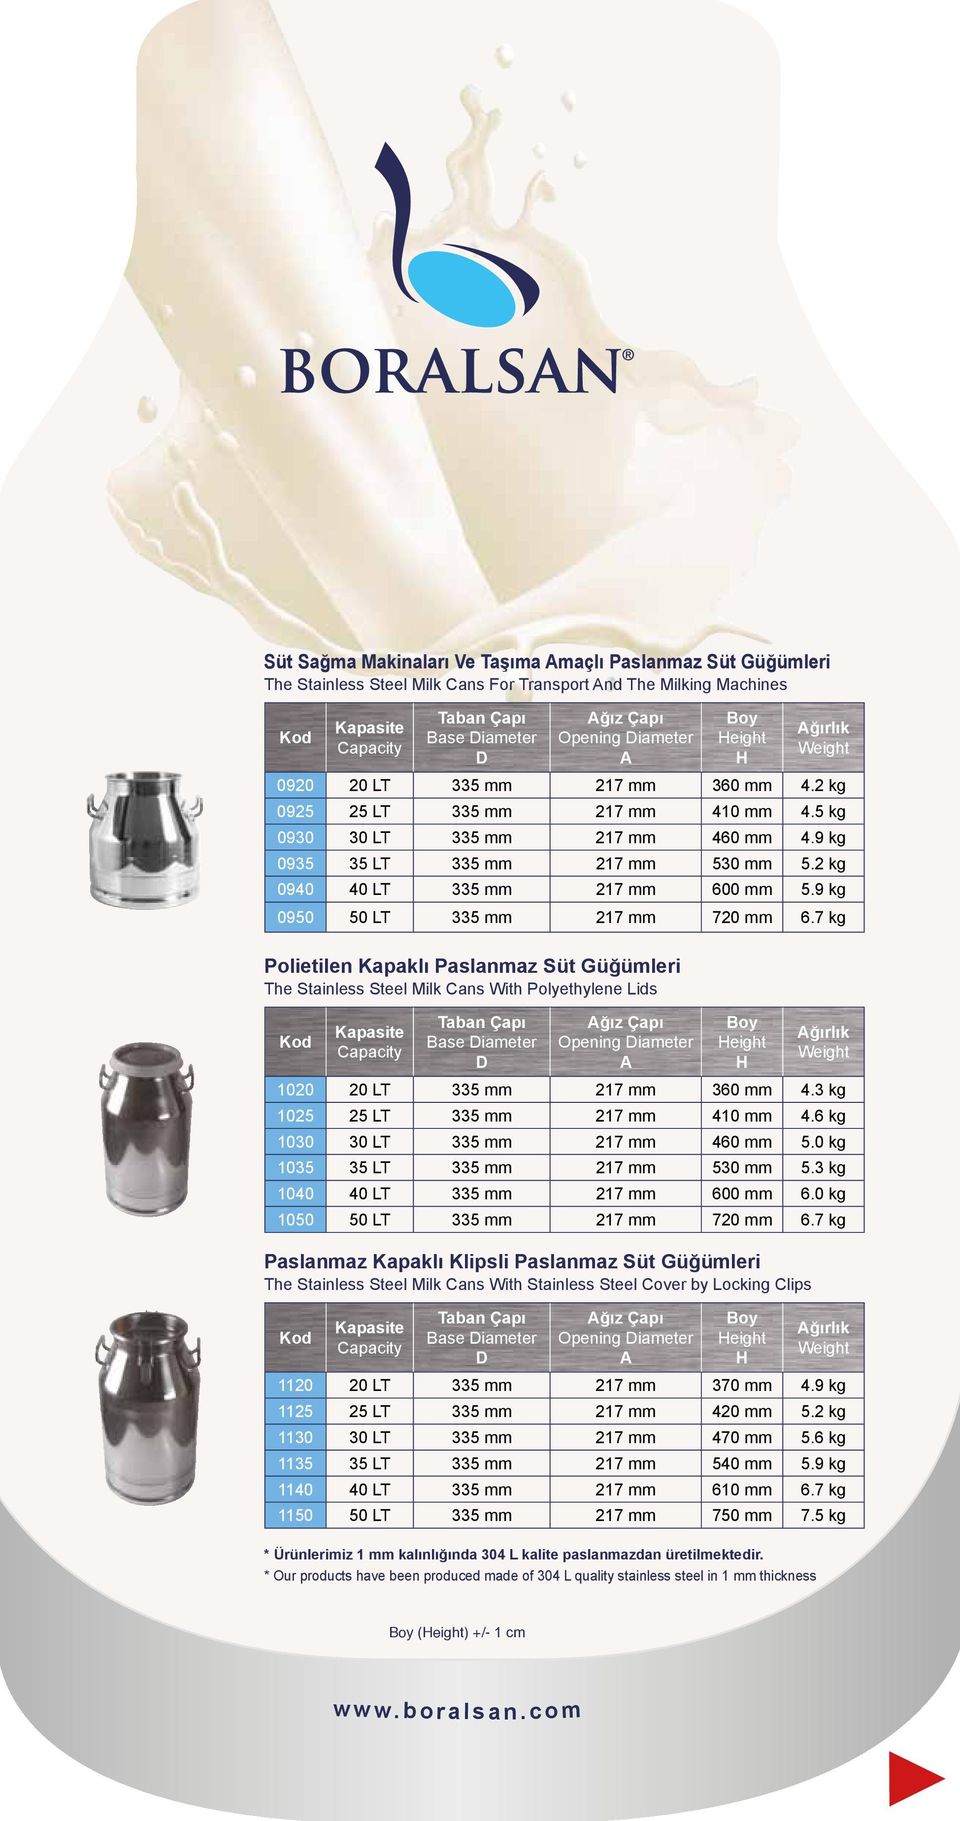 7 kg Polietilen Kapaklı Paslanmaz Süt Güğümleri The Stainless Steel Milk Cans With Polyethylene Lids Opening iameter eight 1020 20 LT 335 mm 217 mm 360 mm 4.3 kg 1025 25 LT 335 mm 217 mm 410 mm 4.